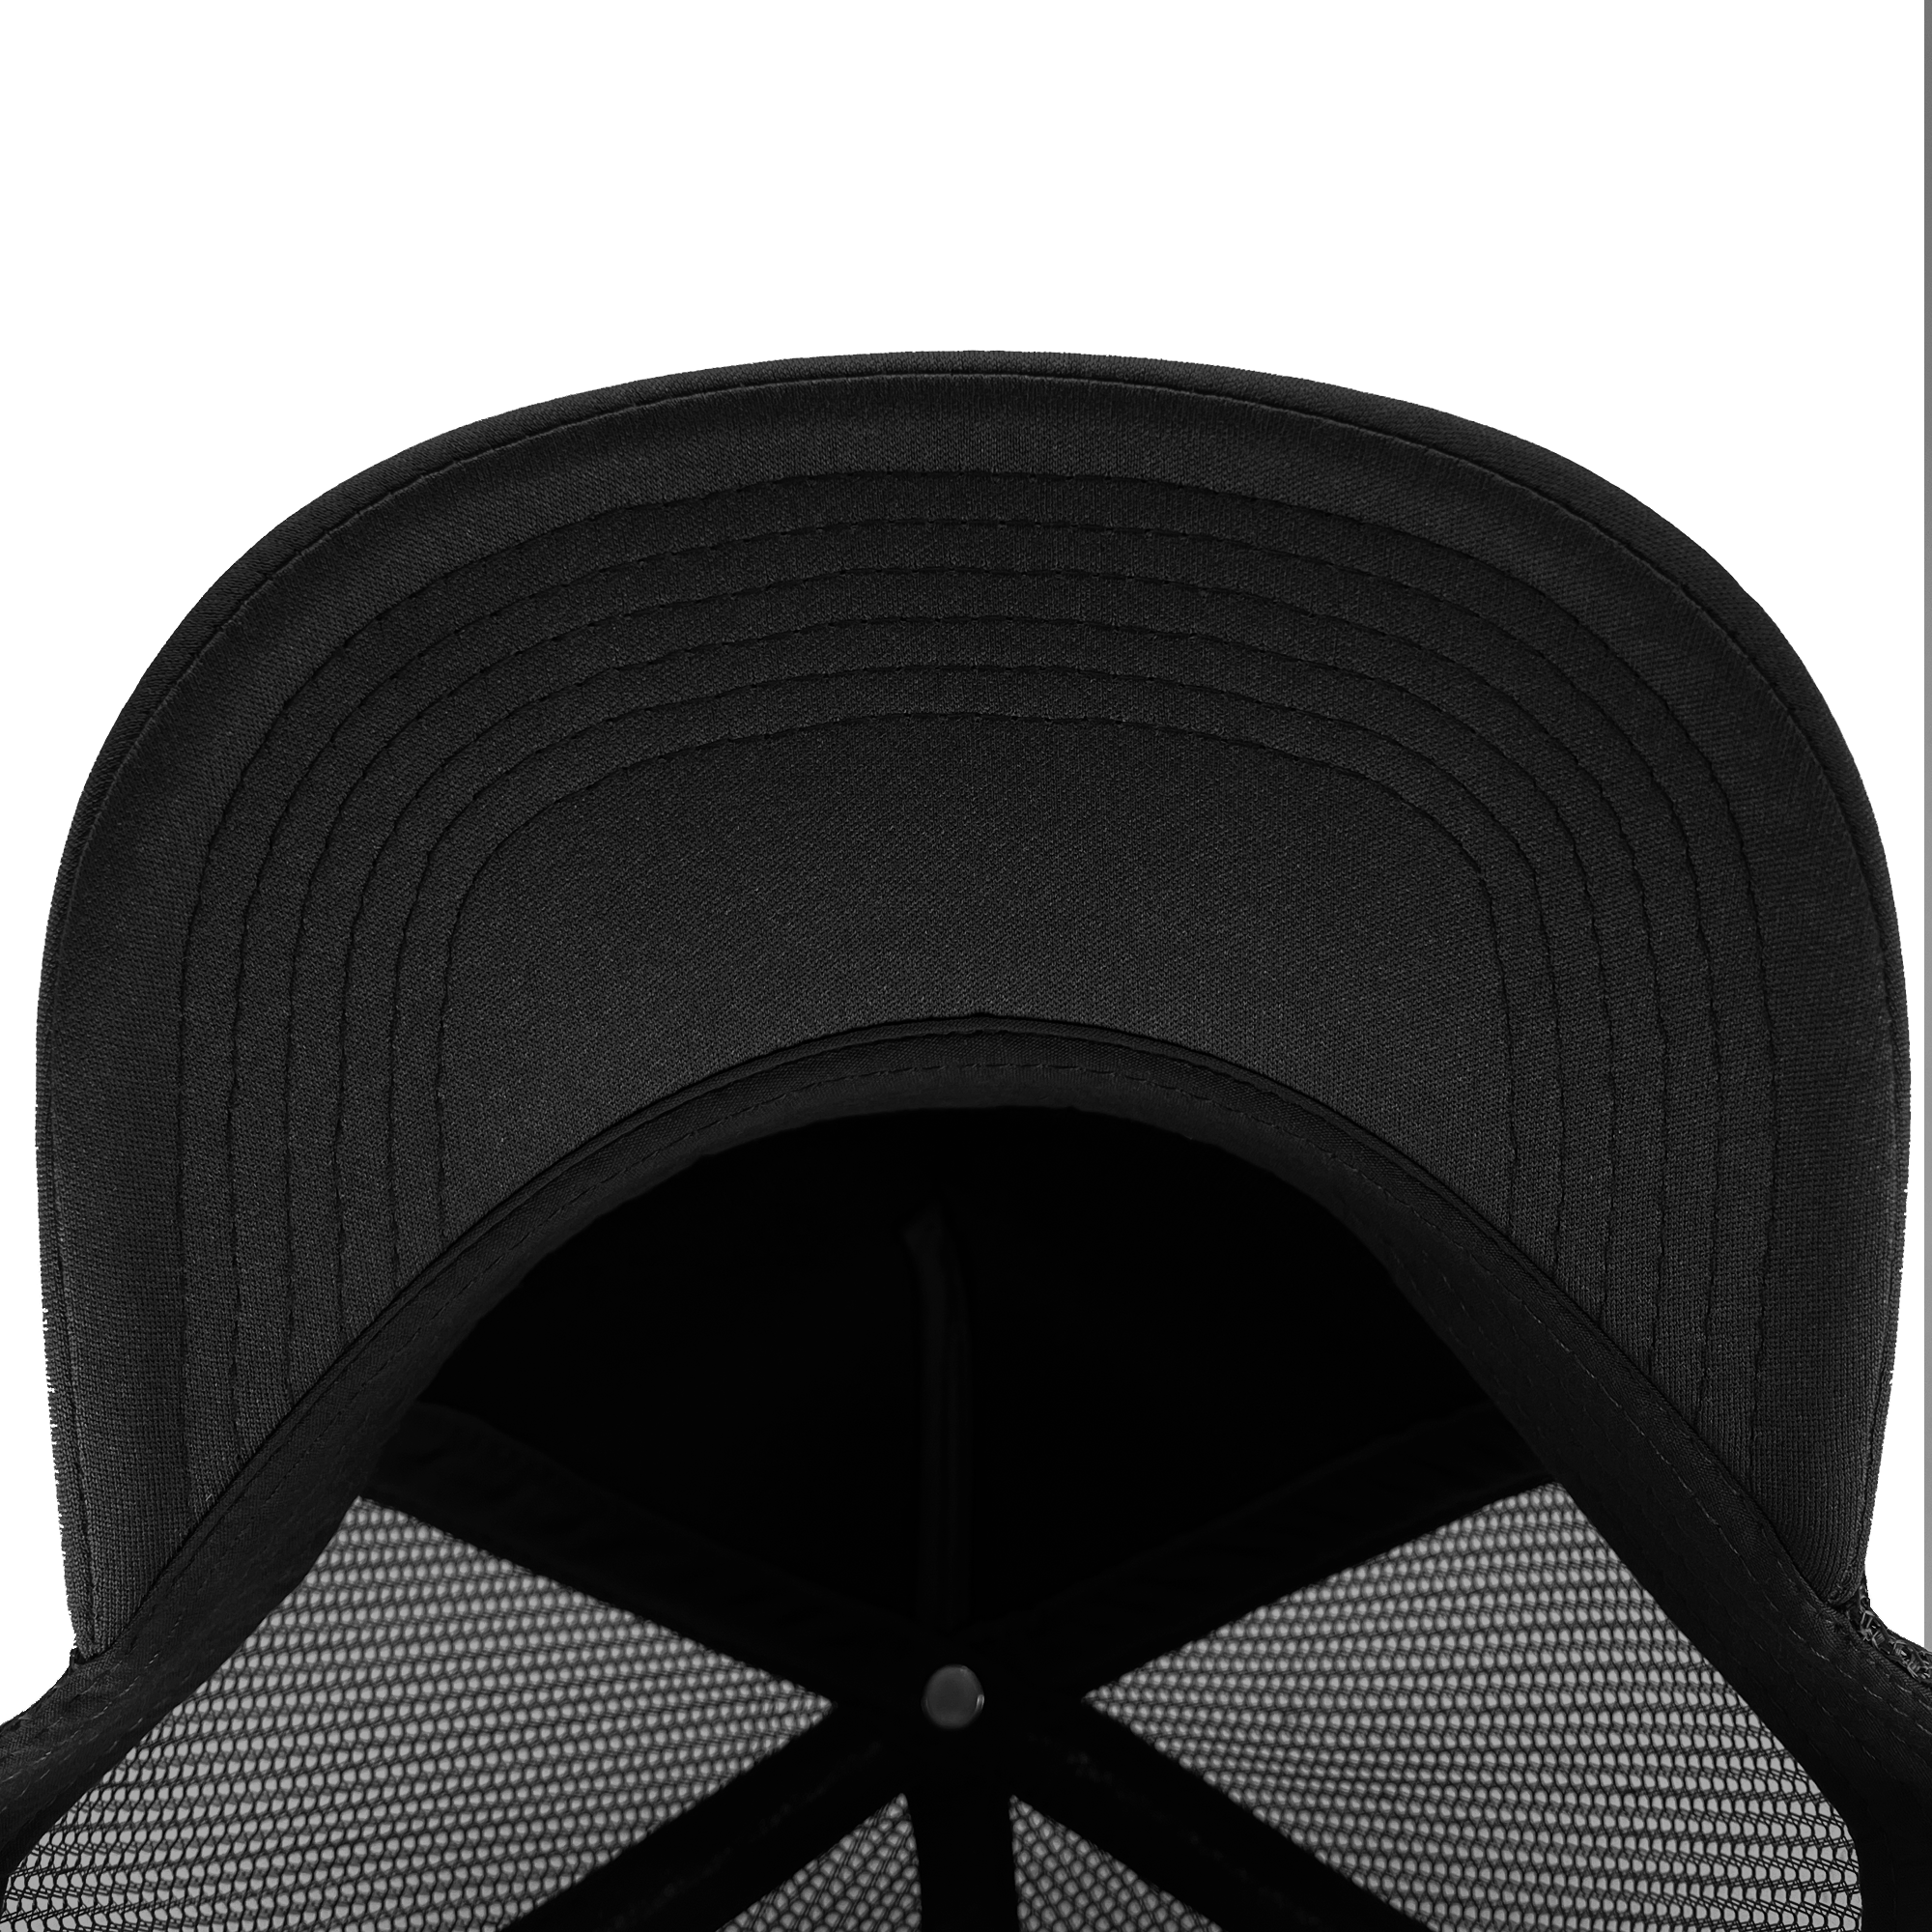 Underside view of black mesh crown and black visor on a trucker cap.